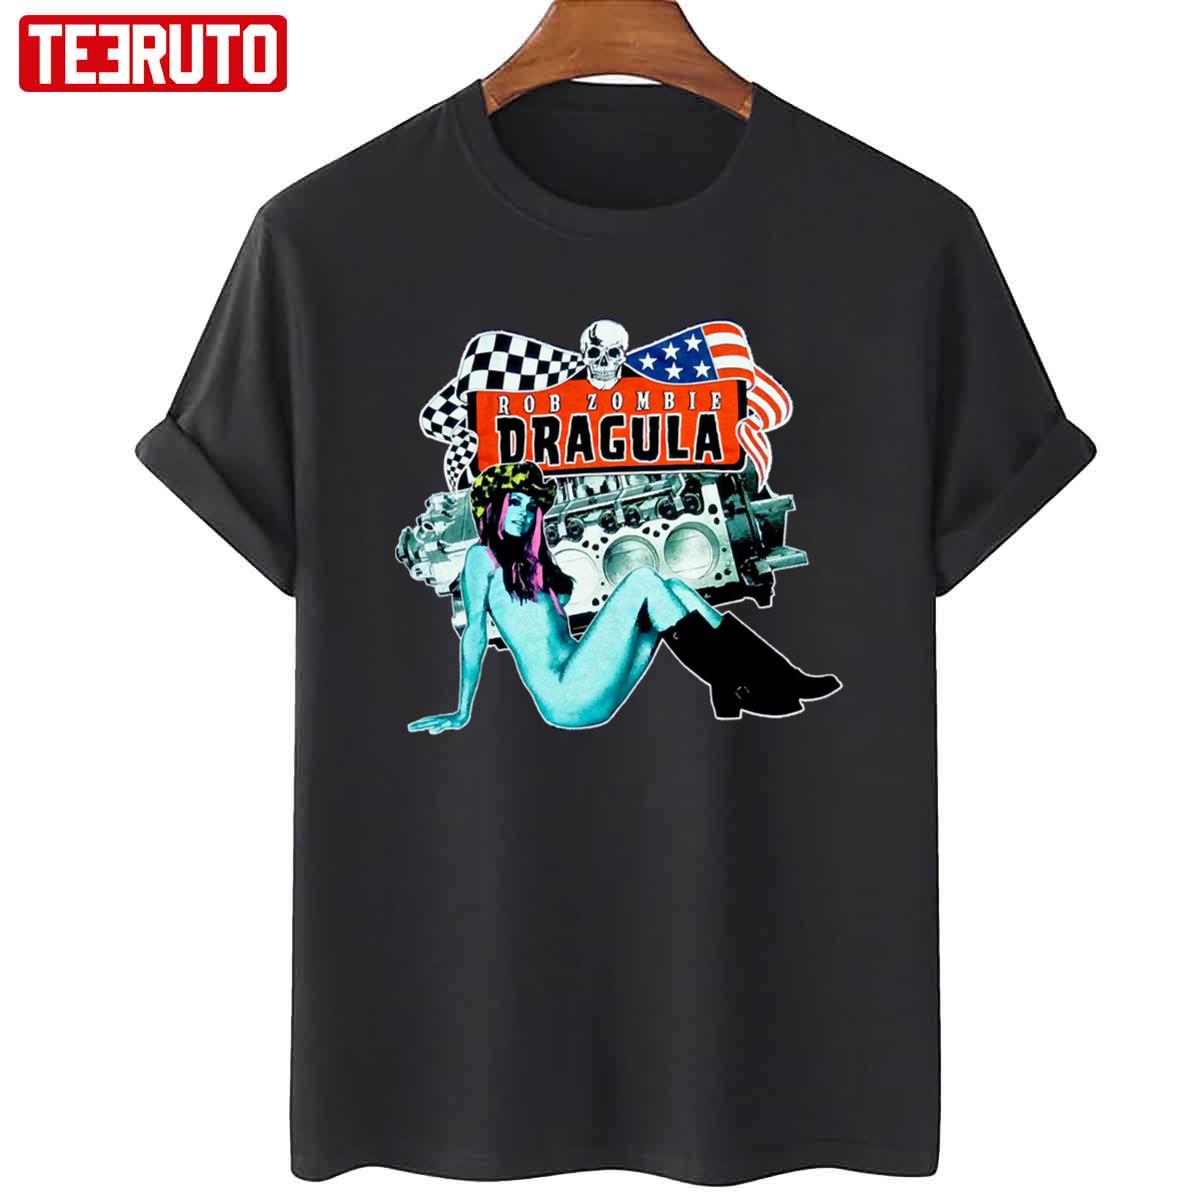 Rob Zombie Dragula Graphic Unisex T-Shirt